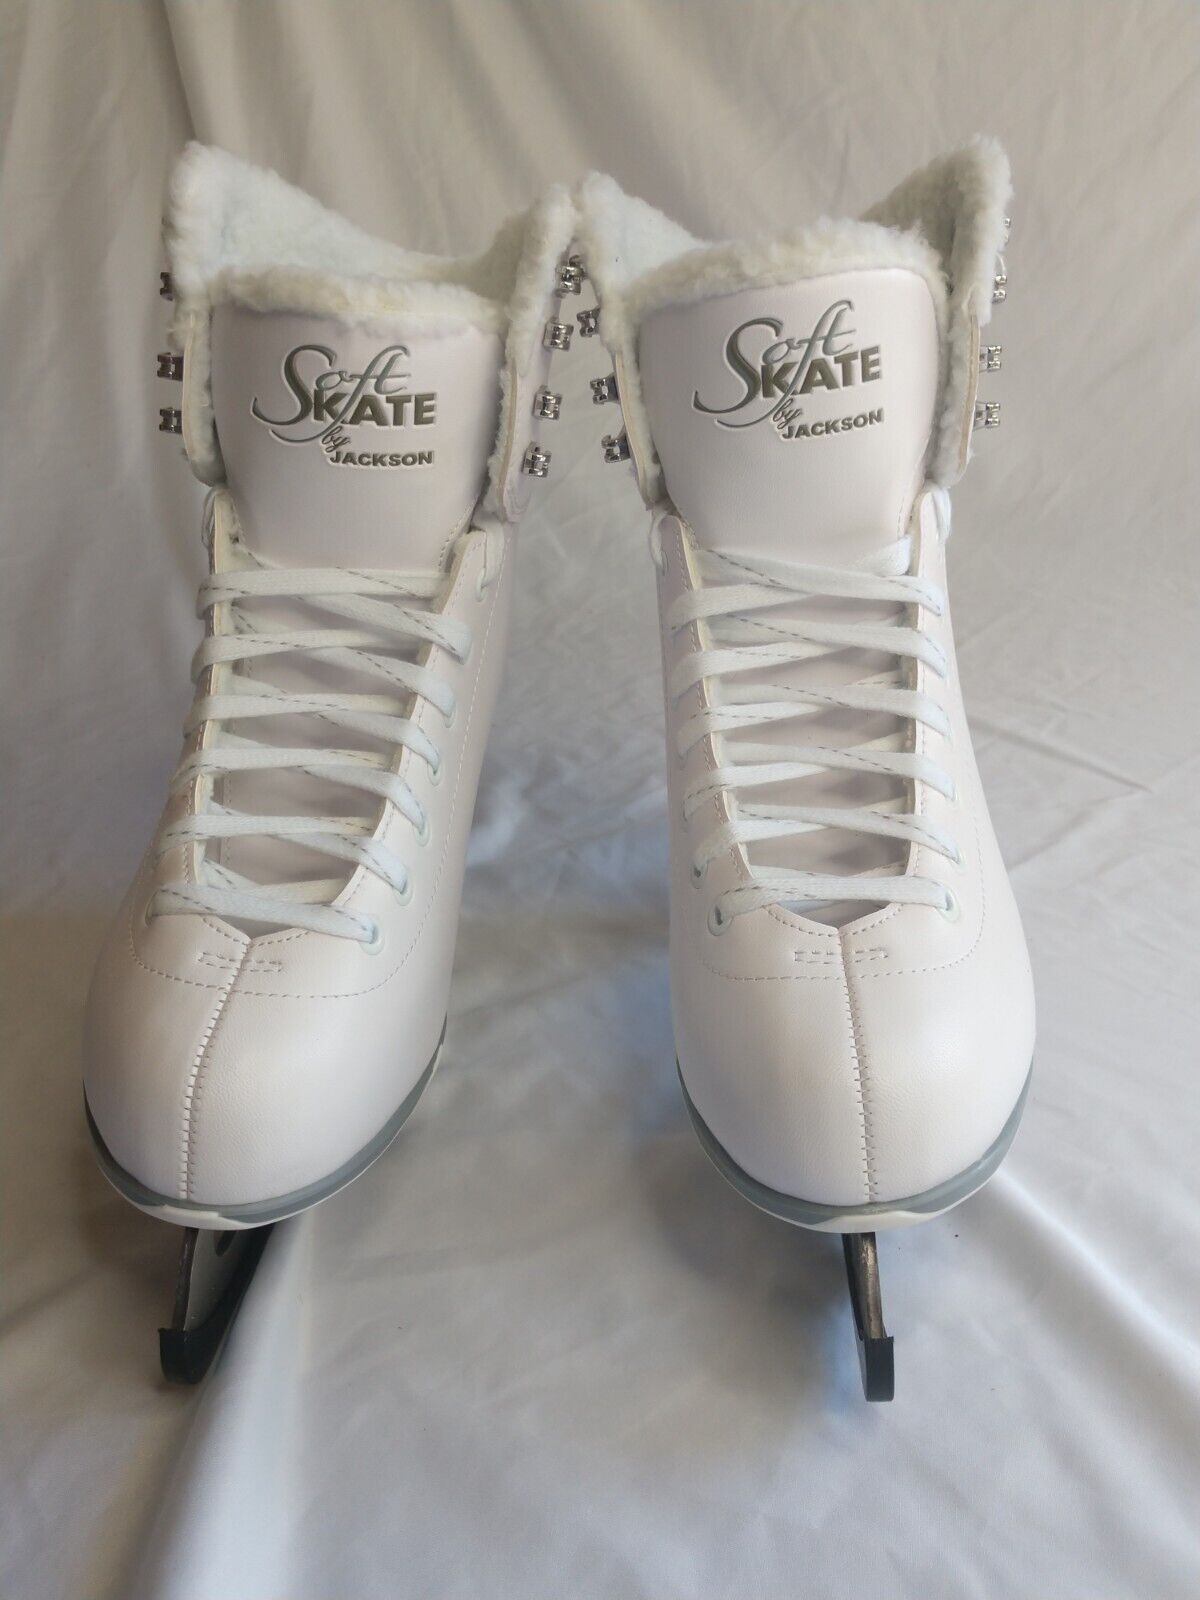 New Jackson Ultima GS180 Ladies SoftSkate Ice Skates w padded White Lining Sz 9